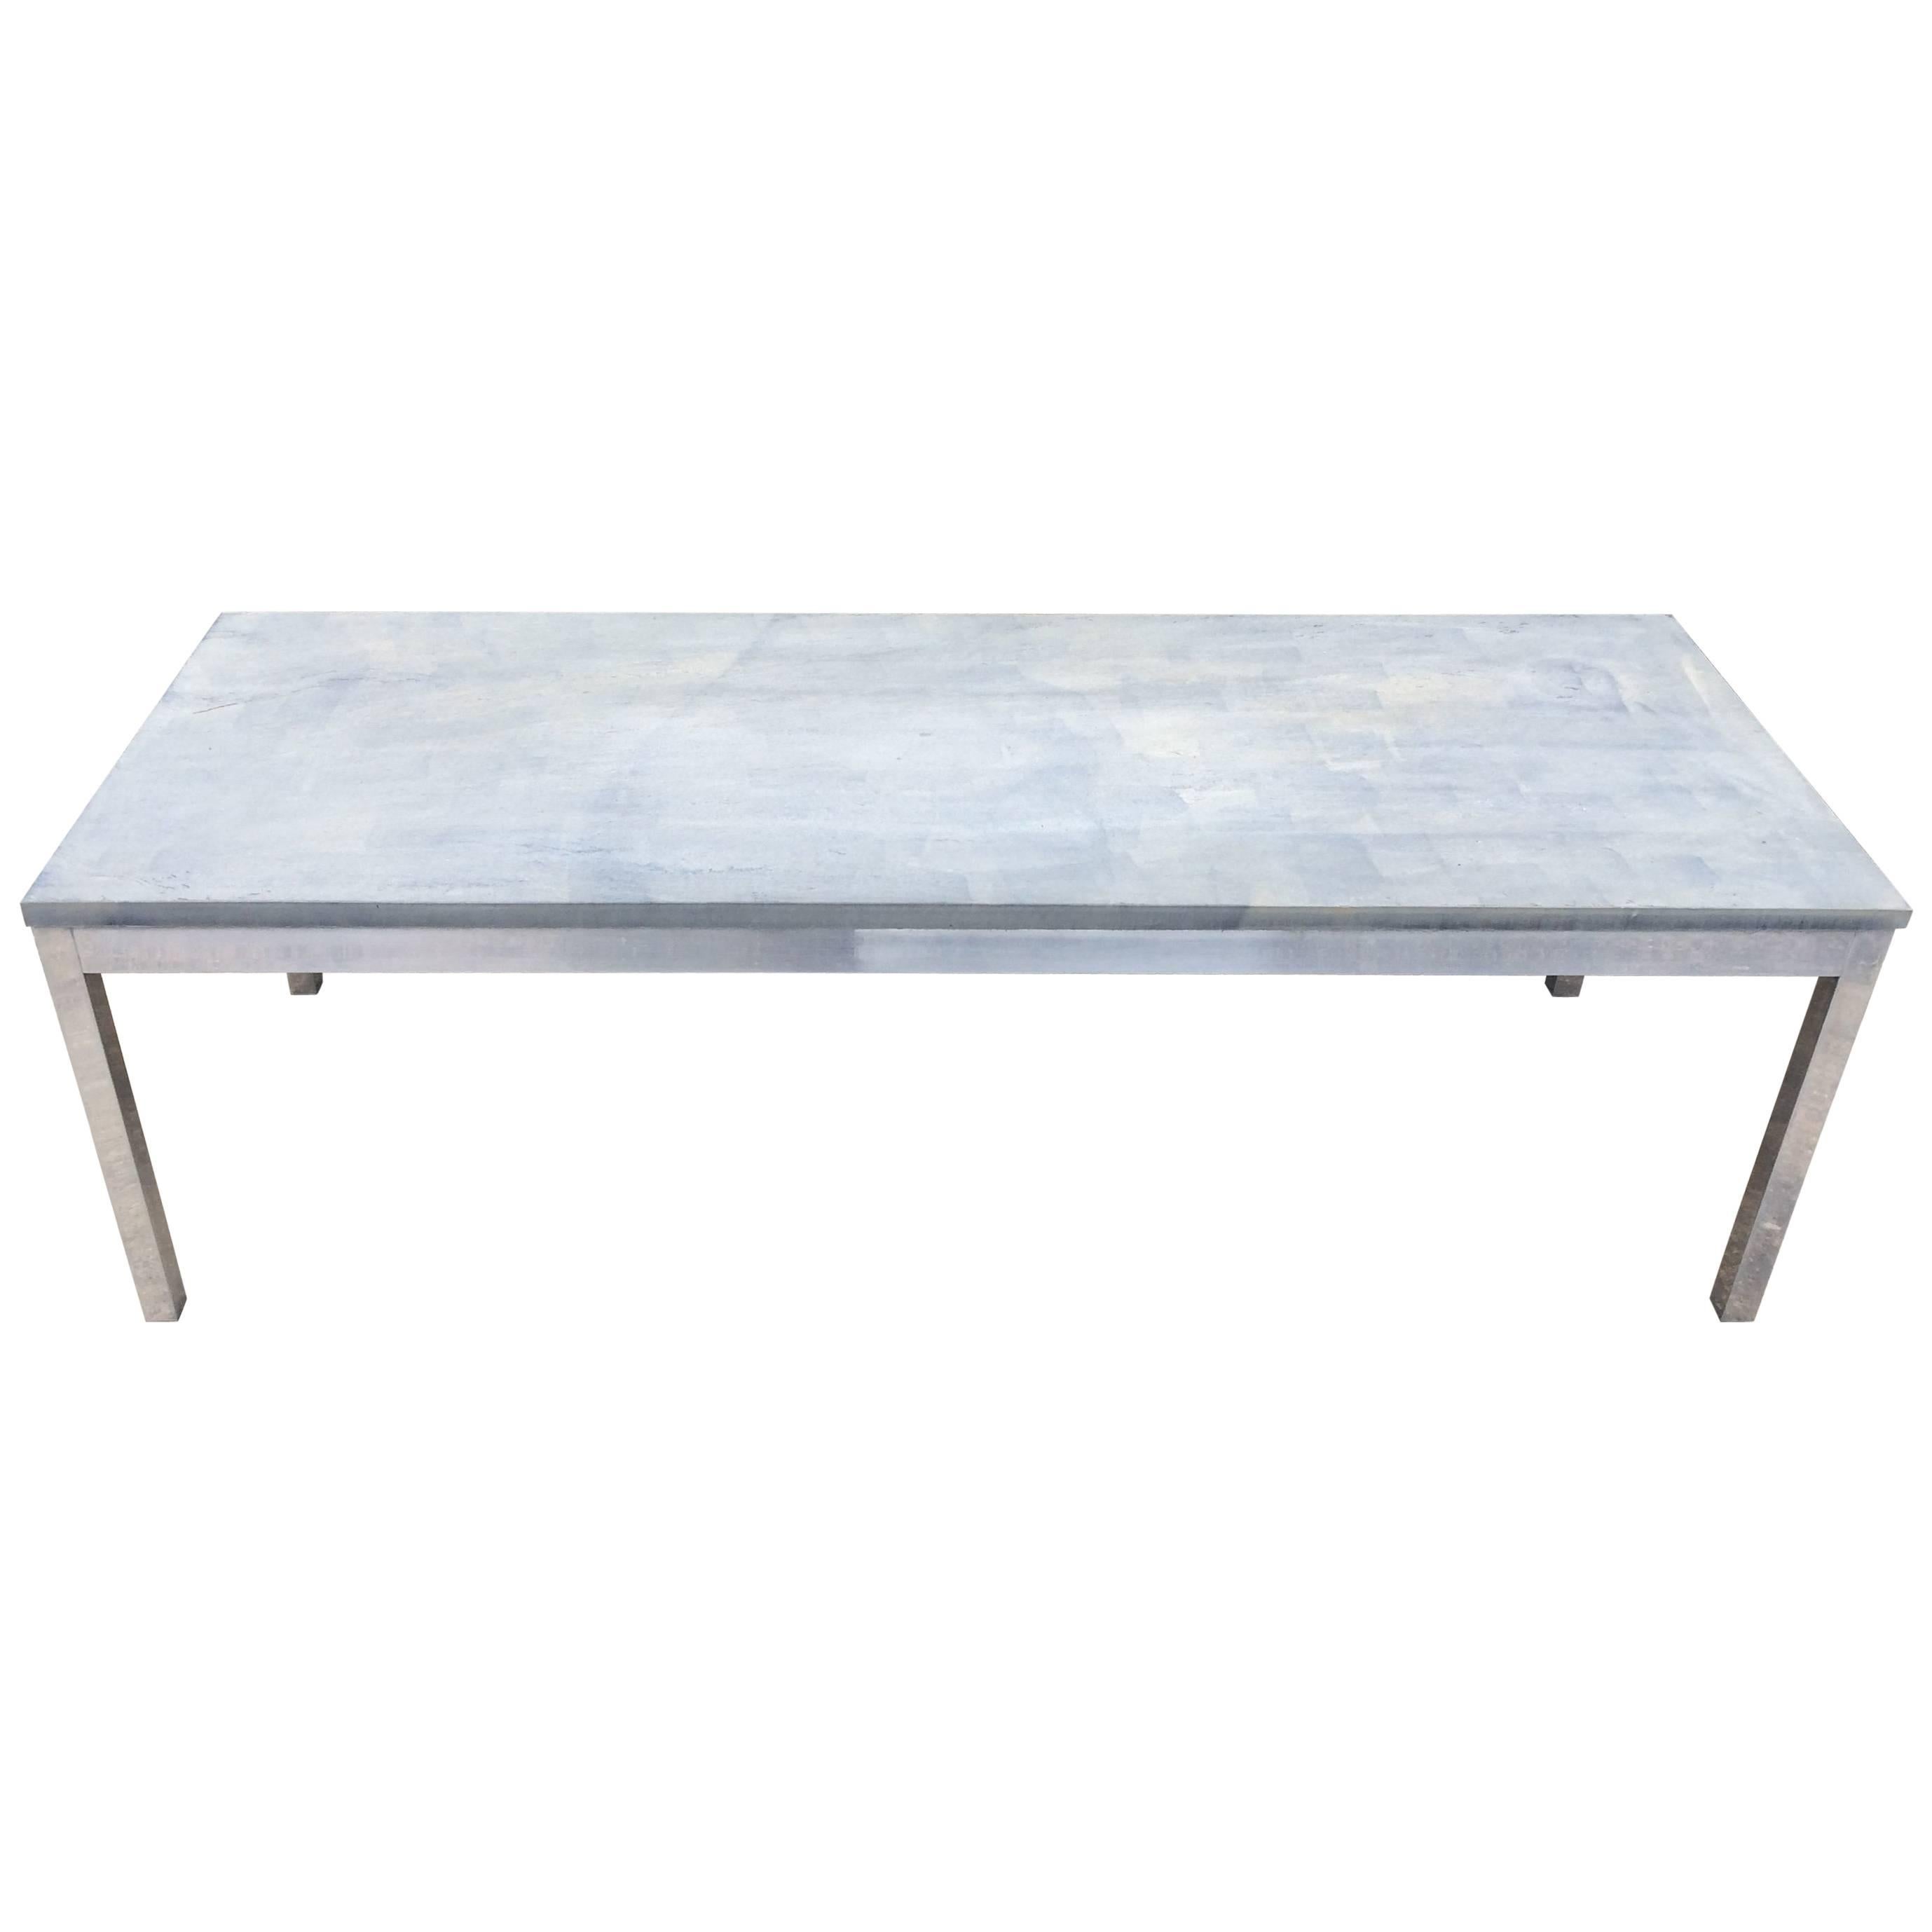 Slate Coffee Table with Aluminum Base